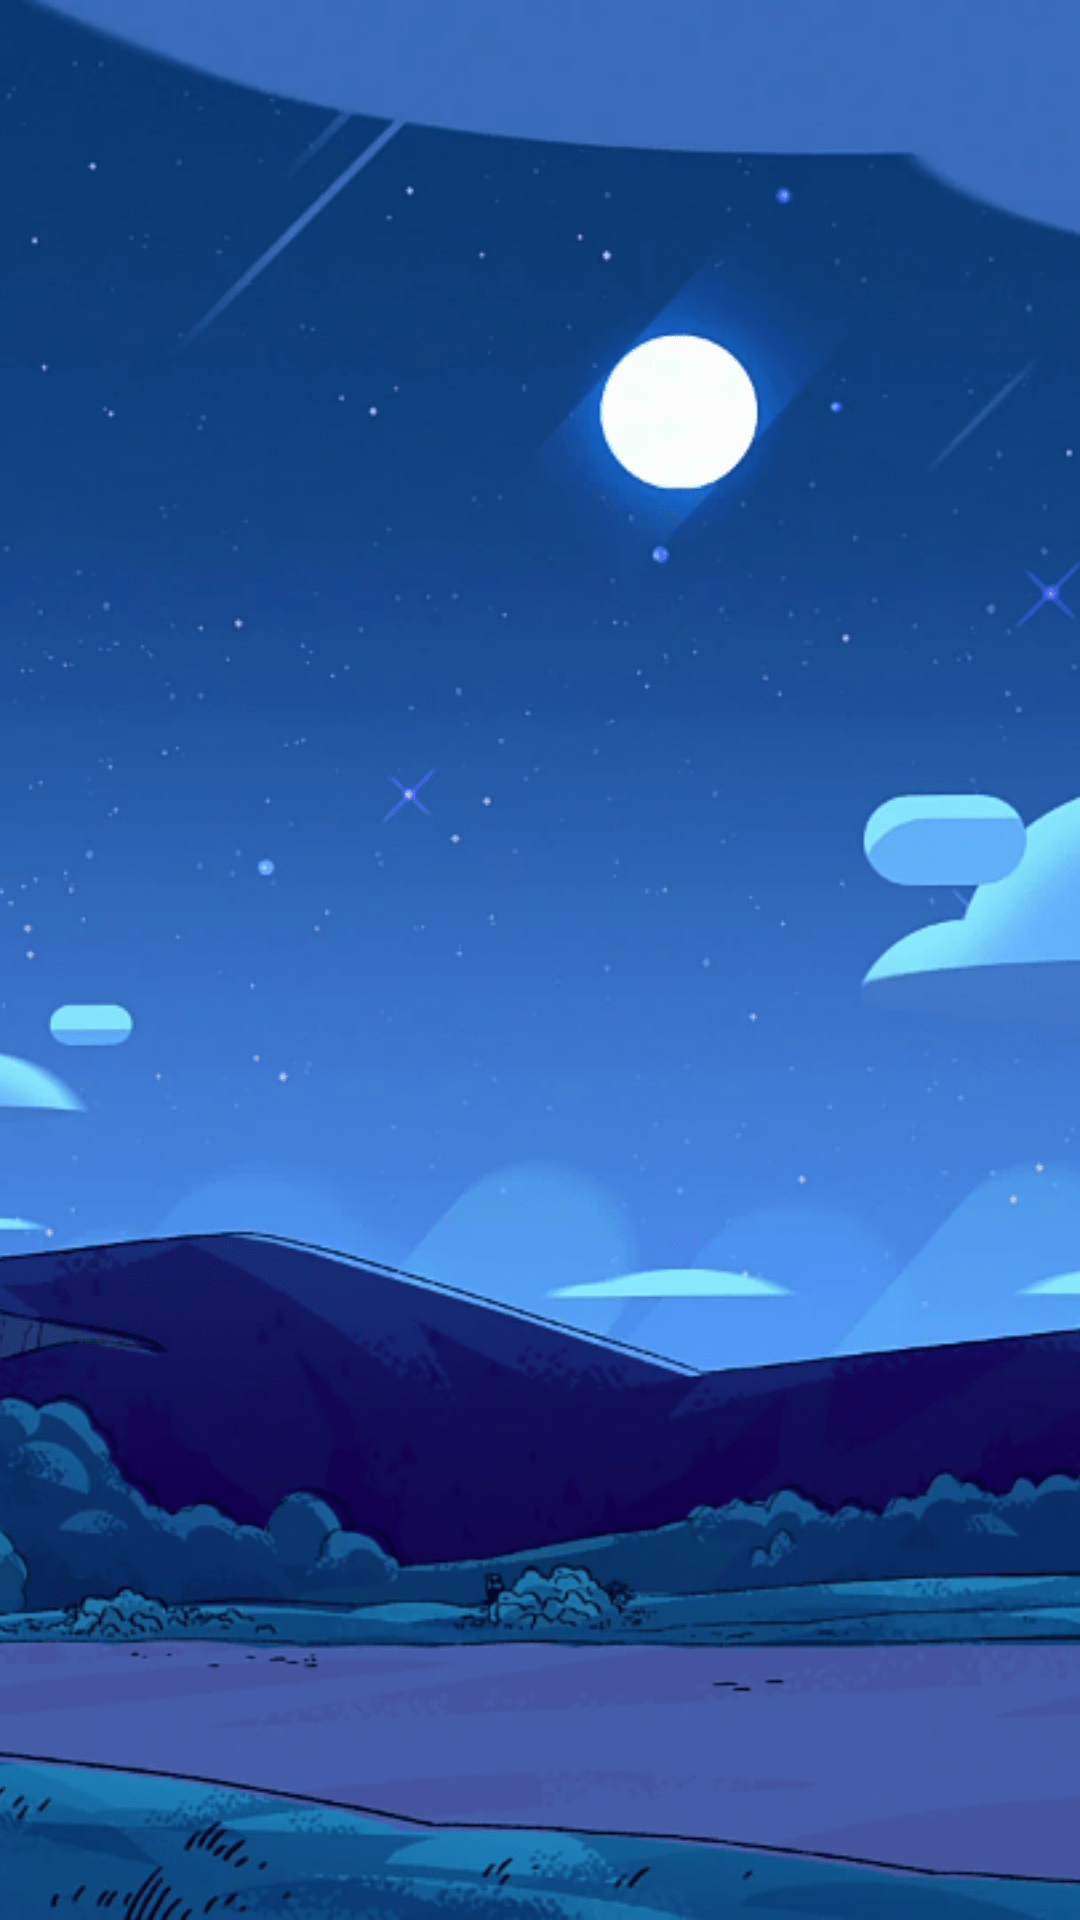 A Steven Universe wallpaper I made for my phone - Steven Universe